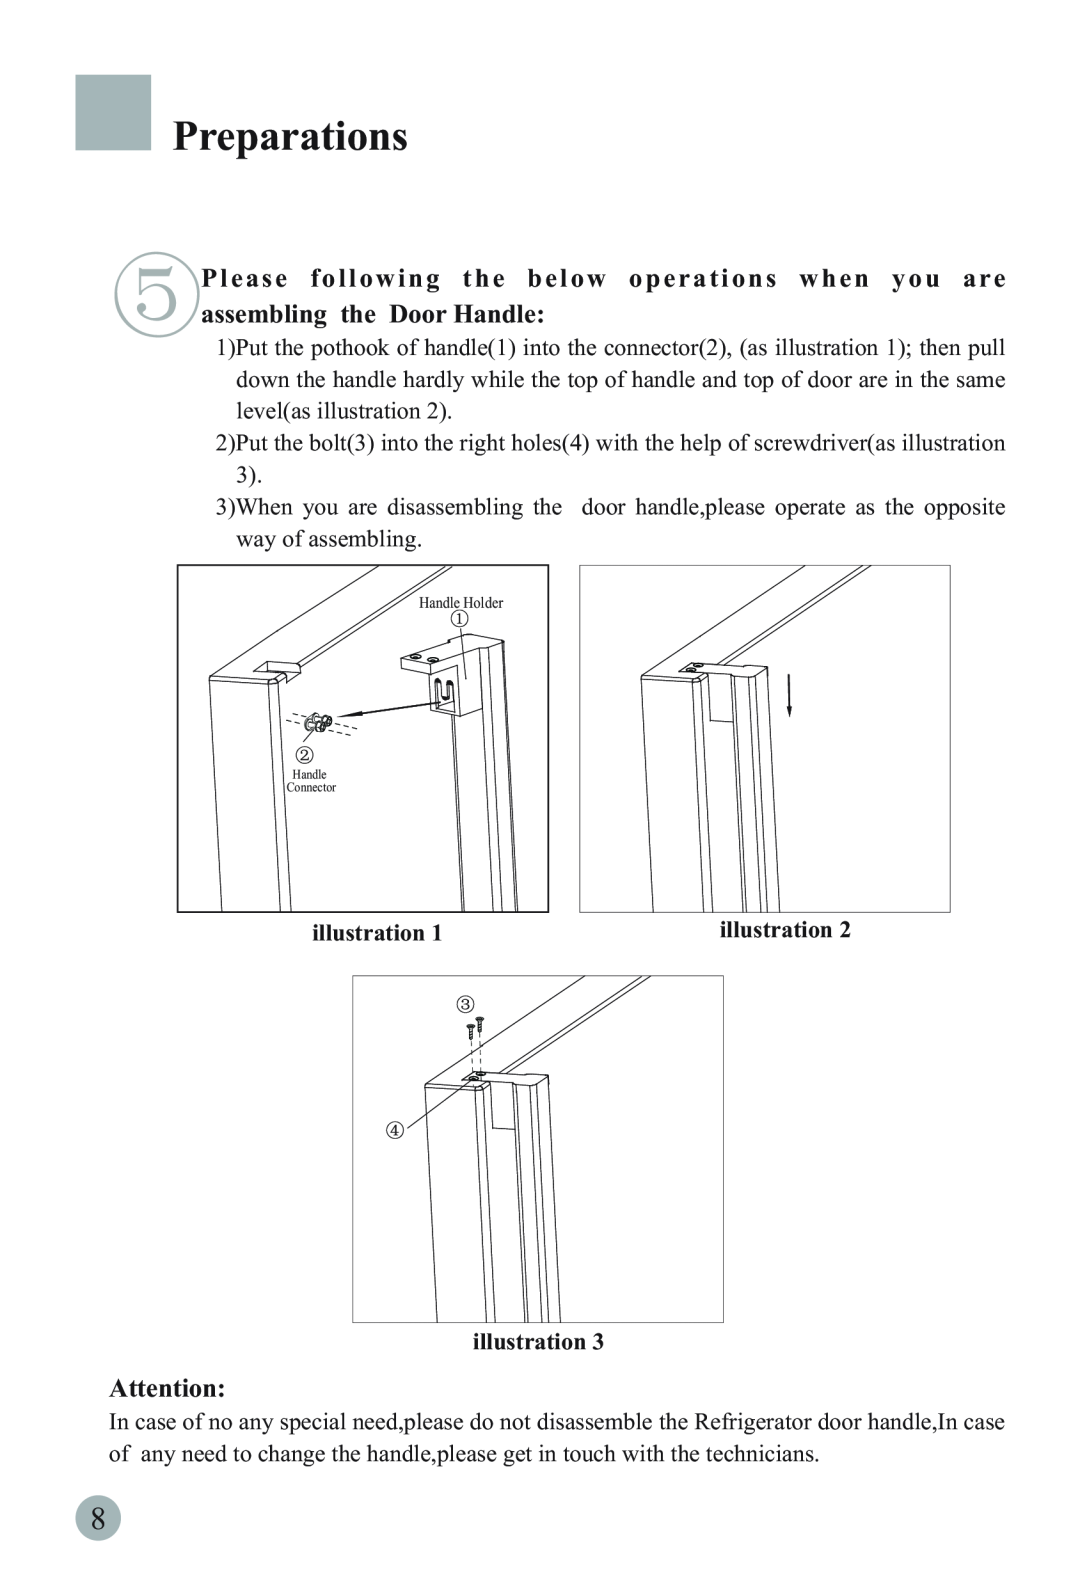 Haier HRF-6631RG manual assembling the Door Handle, Preparations, illustration 